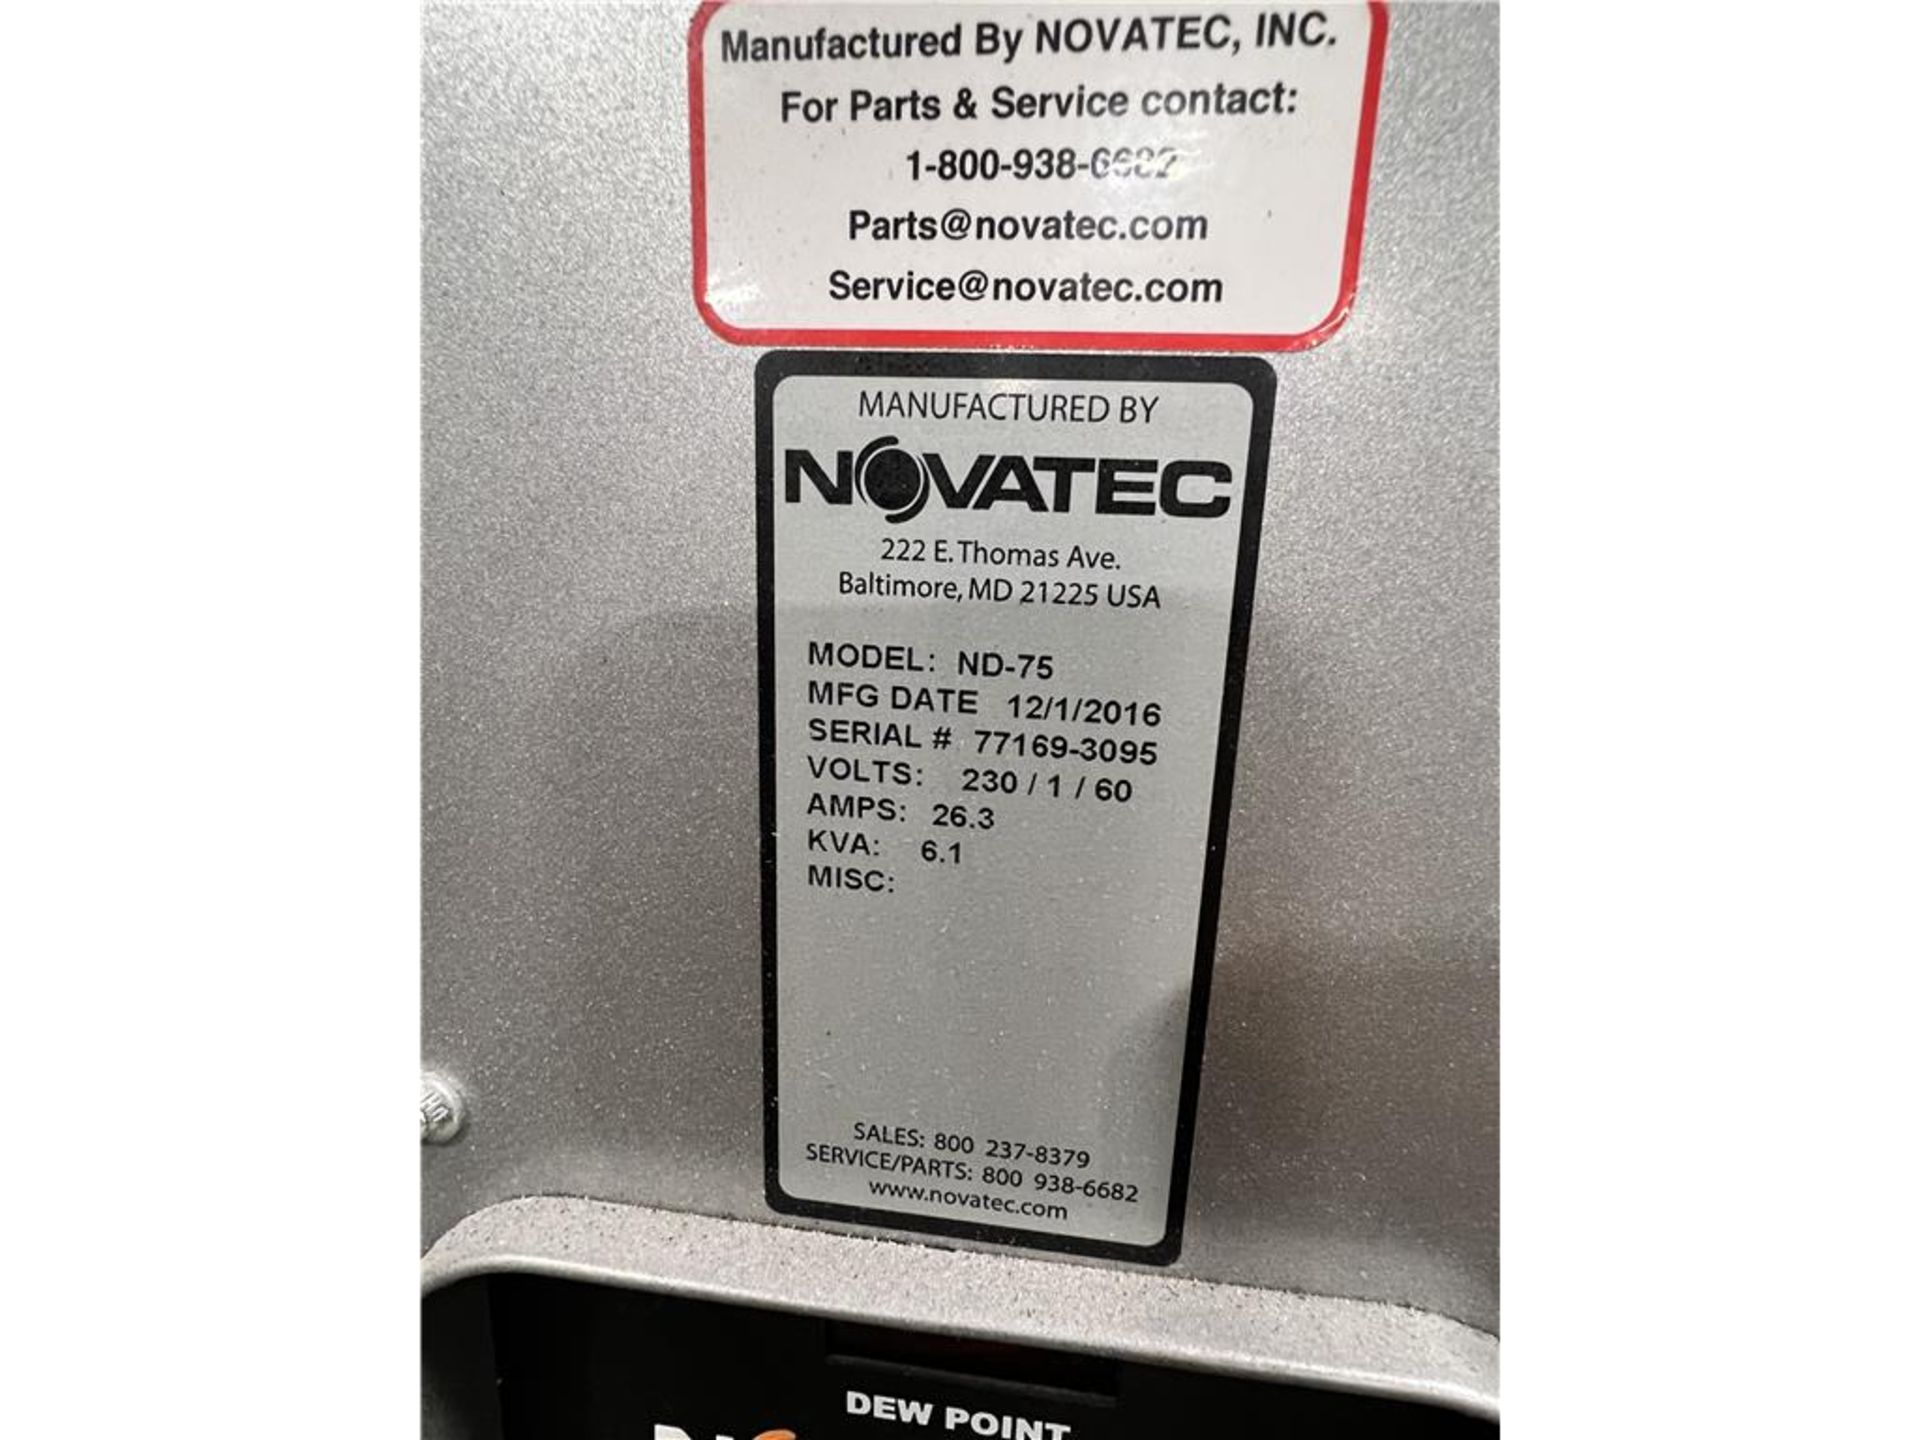 2016 NOVATEC ND-75 DRYER - Image 2 of 2